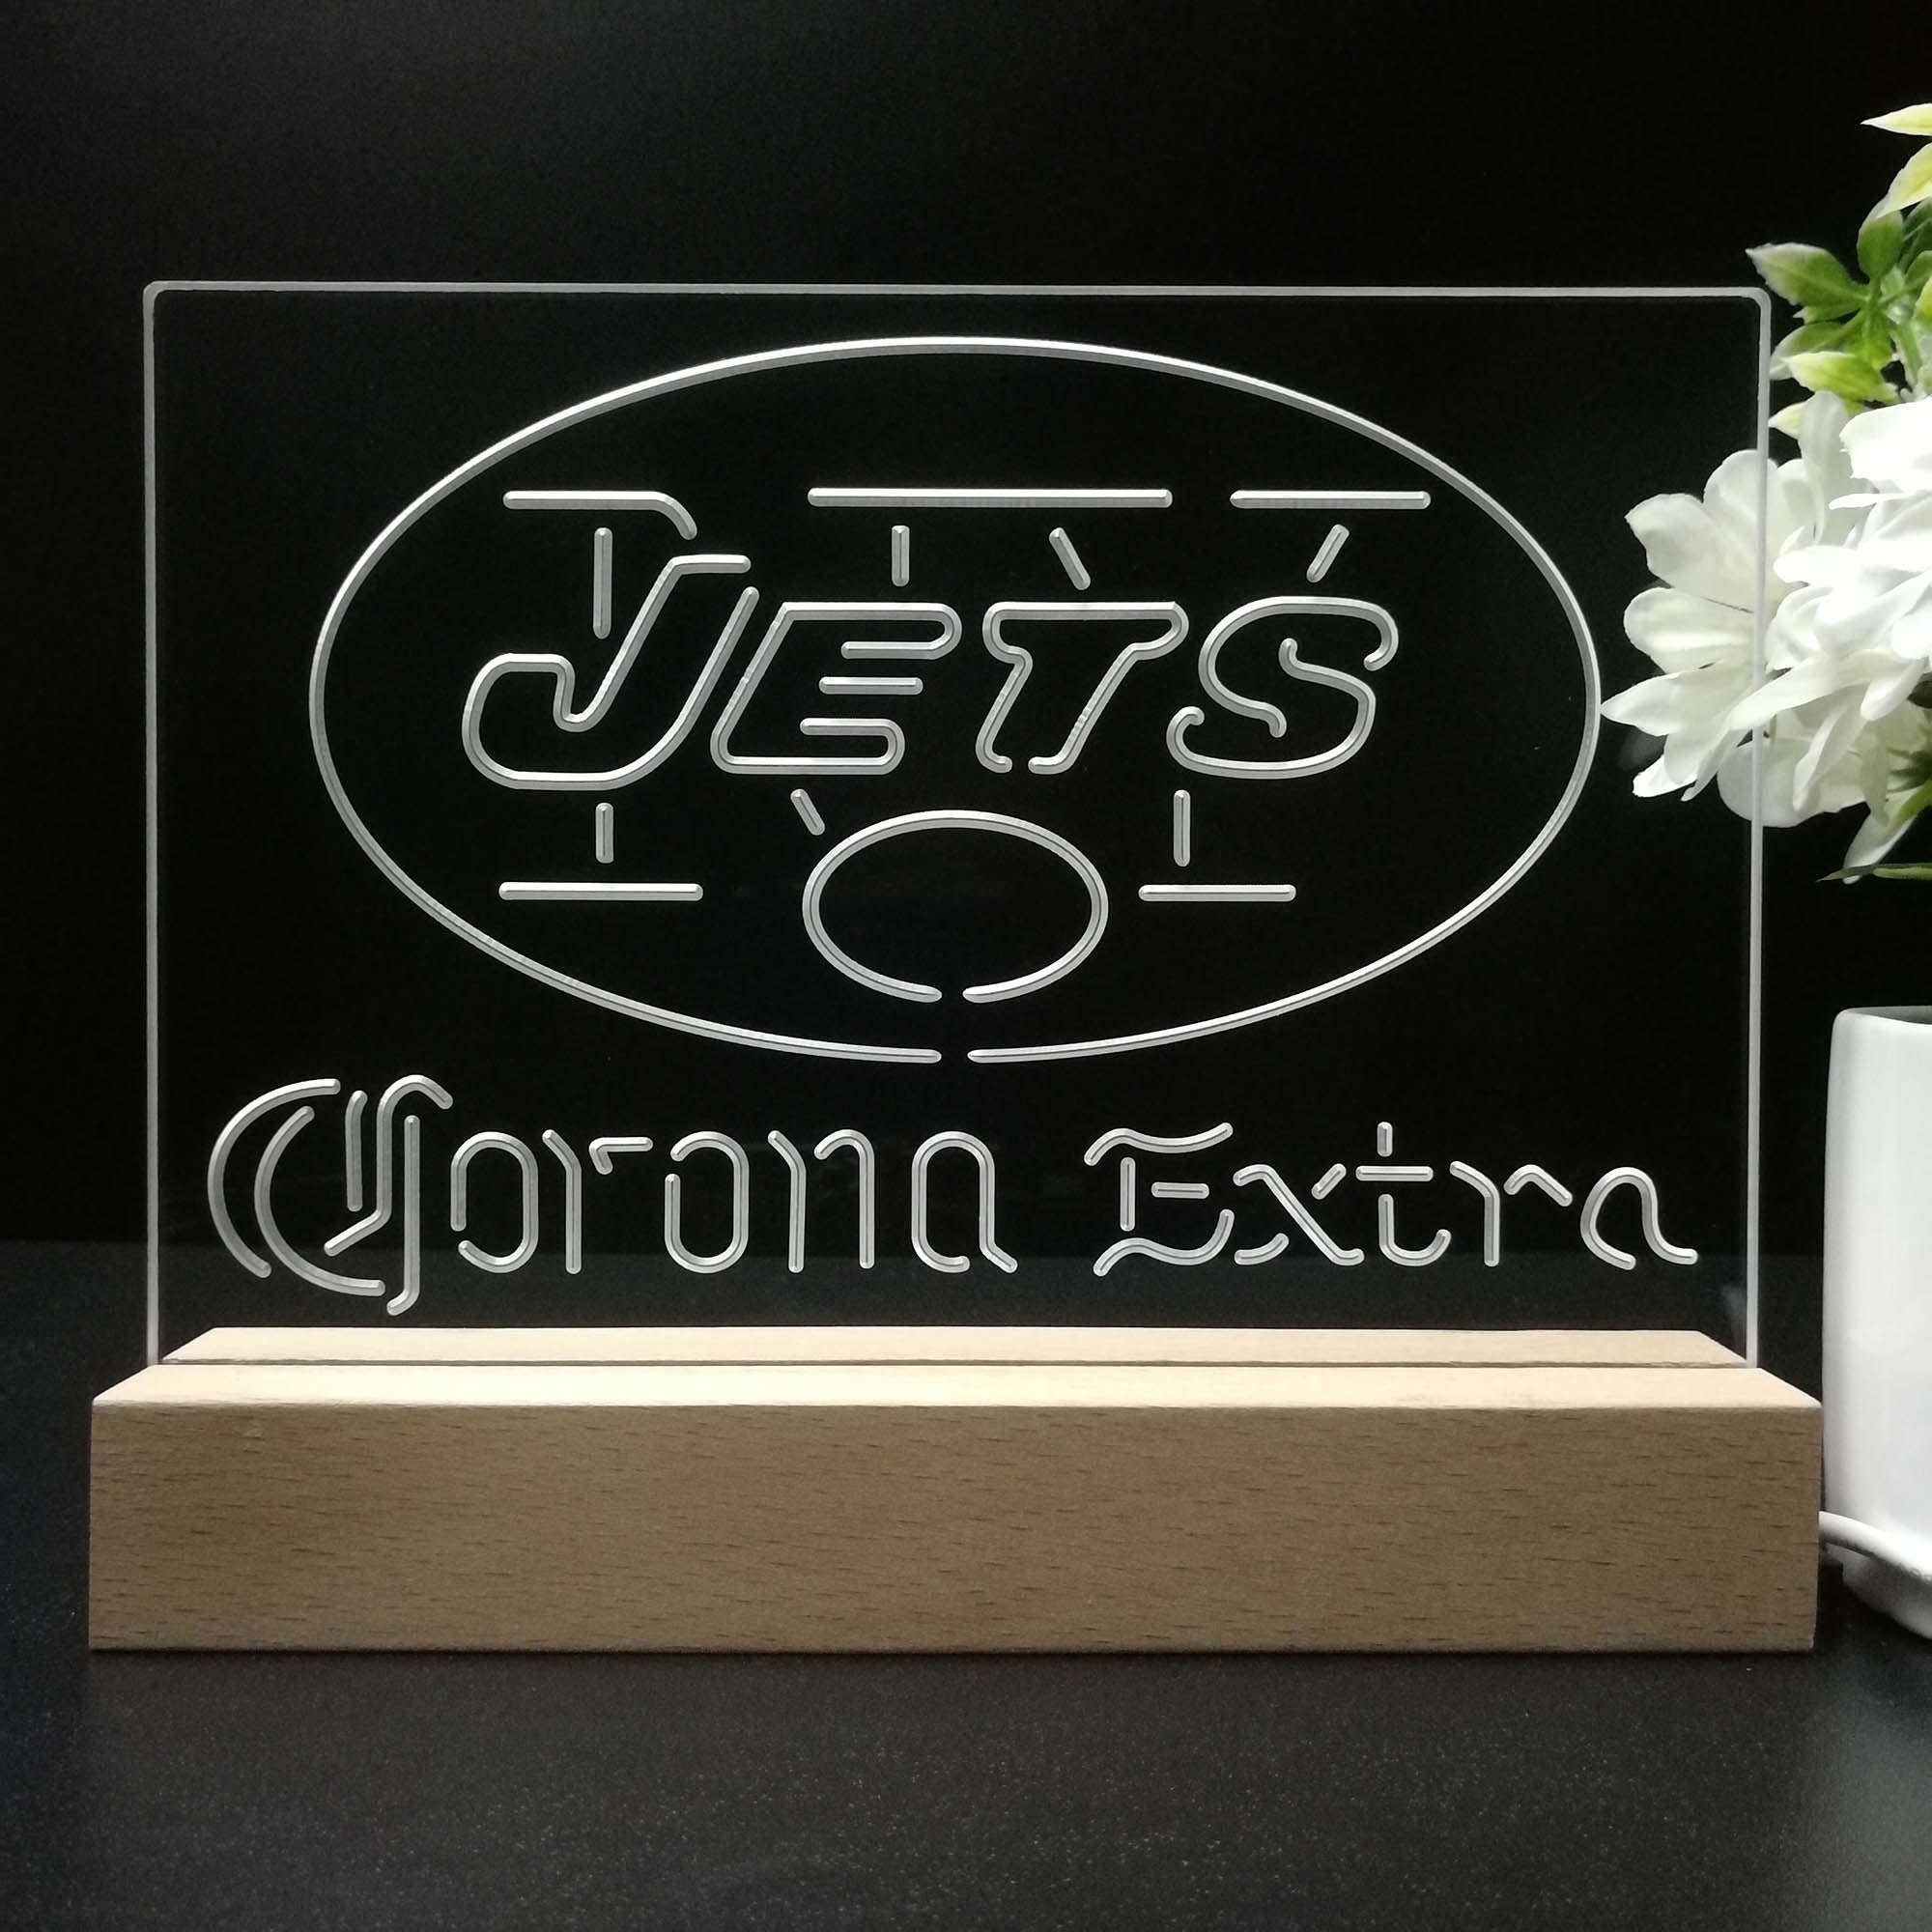 Corona Extra Bar New York Jets Est. 1960 Night Light Pub Bar Lamp